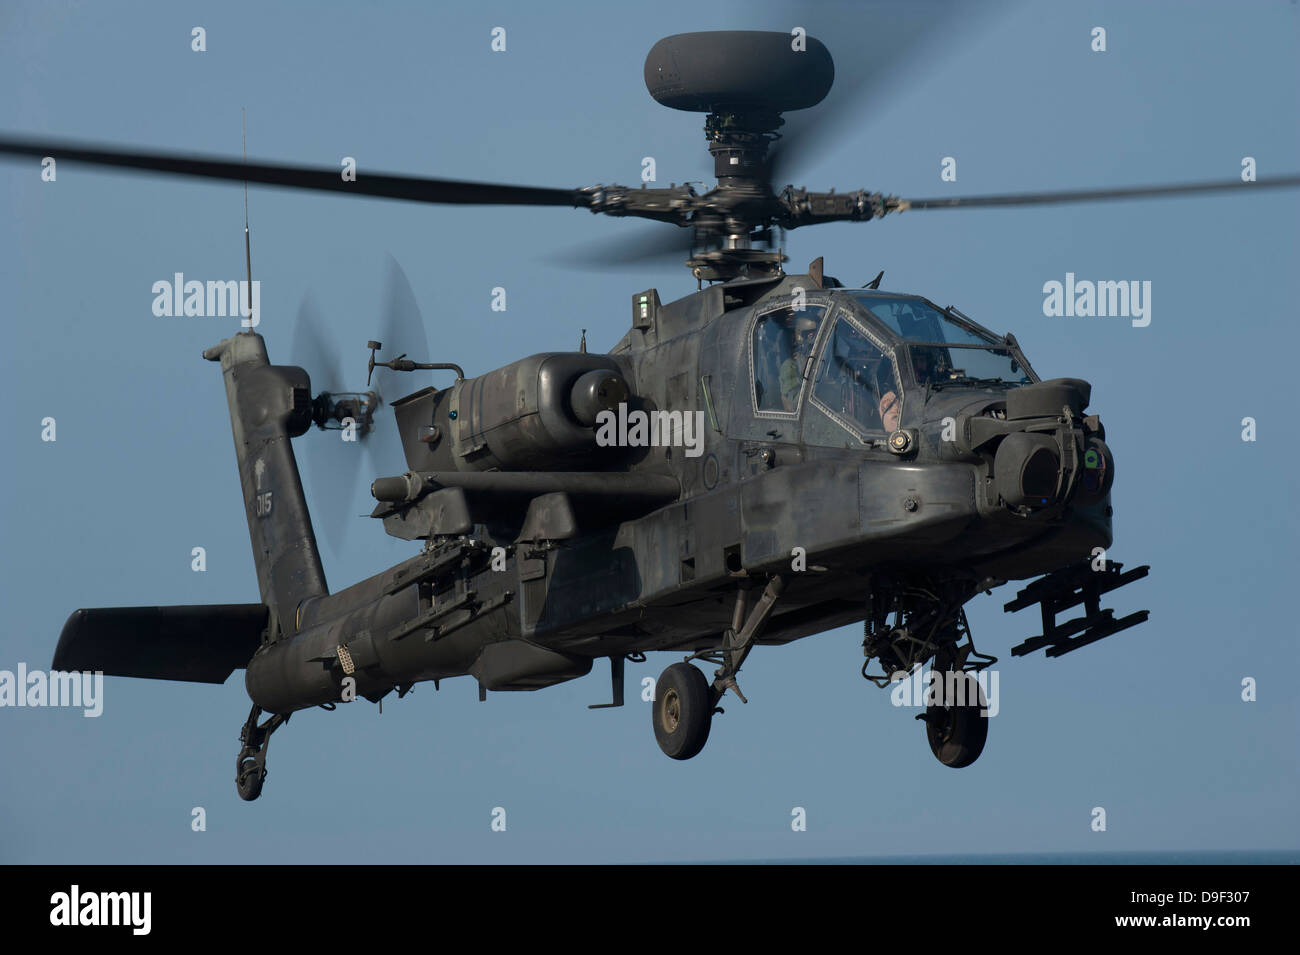 A U.S. Army AH-64 Apache helicopter Stock Photo - Alamy